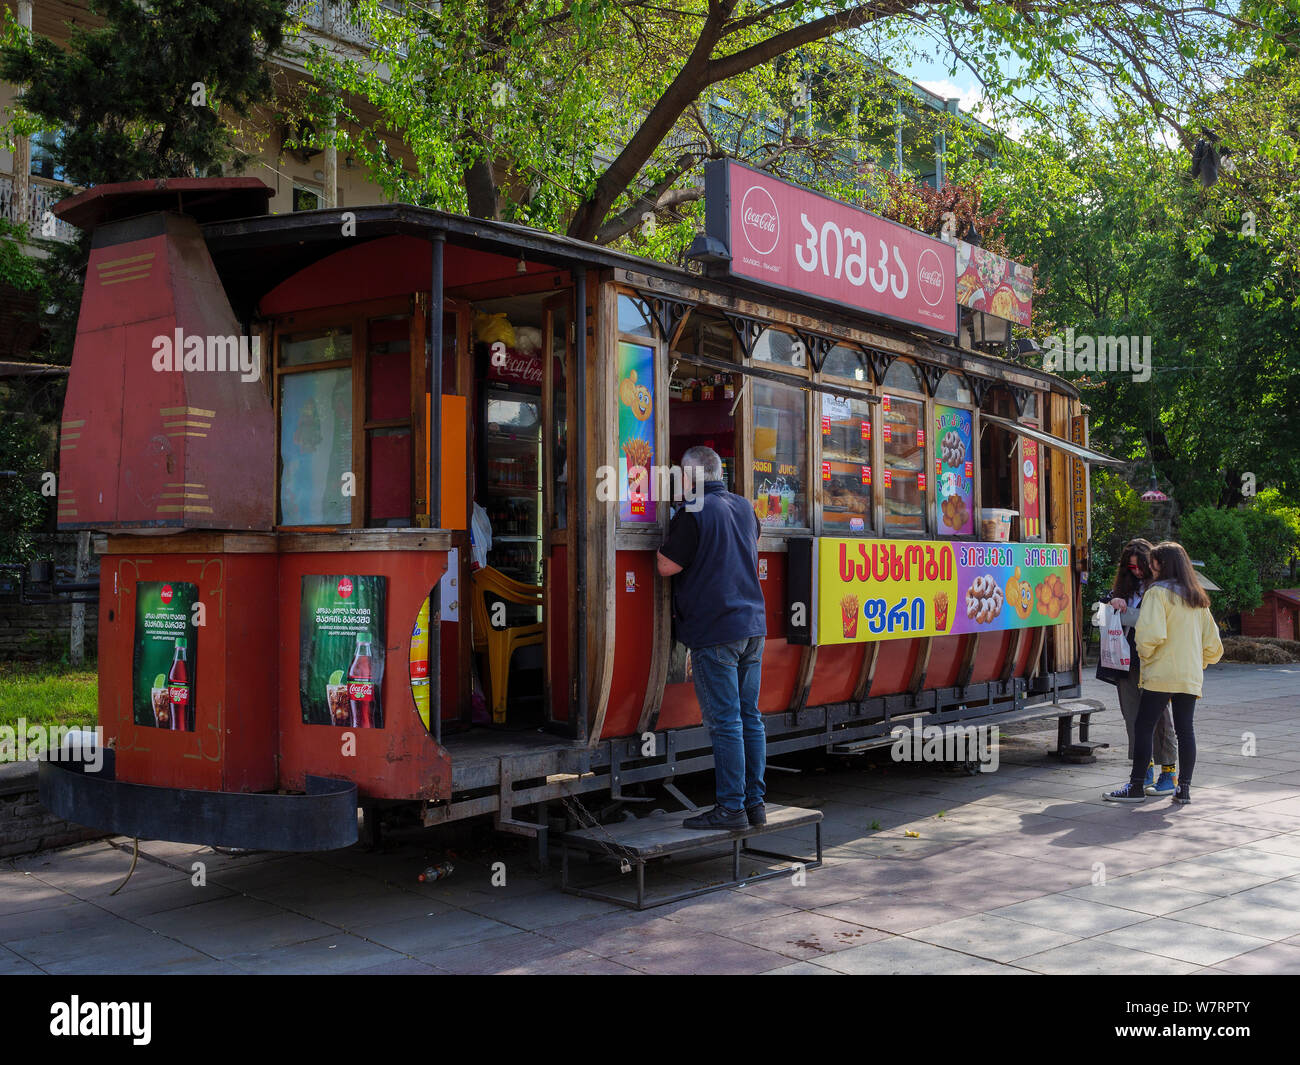 Imbiss in ausrangierter Straßenbahn an der Puschkin Str. Aleksandr Pushkin, Tiflis – Tbilissi, Georgien, Europa Foodstall in  former streetcar, Tbilis Stock Photo